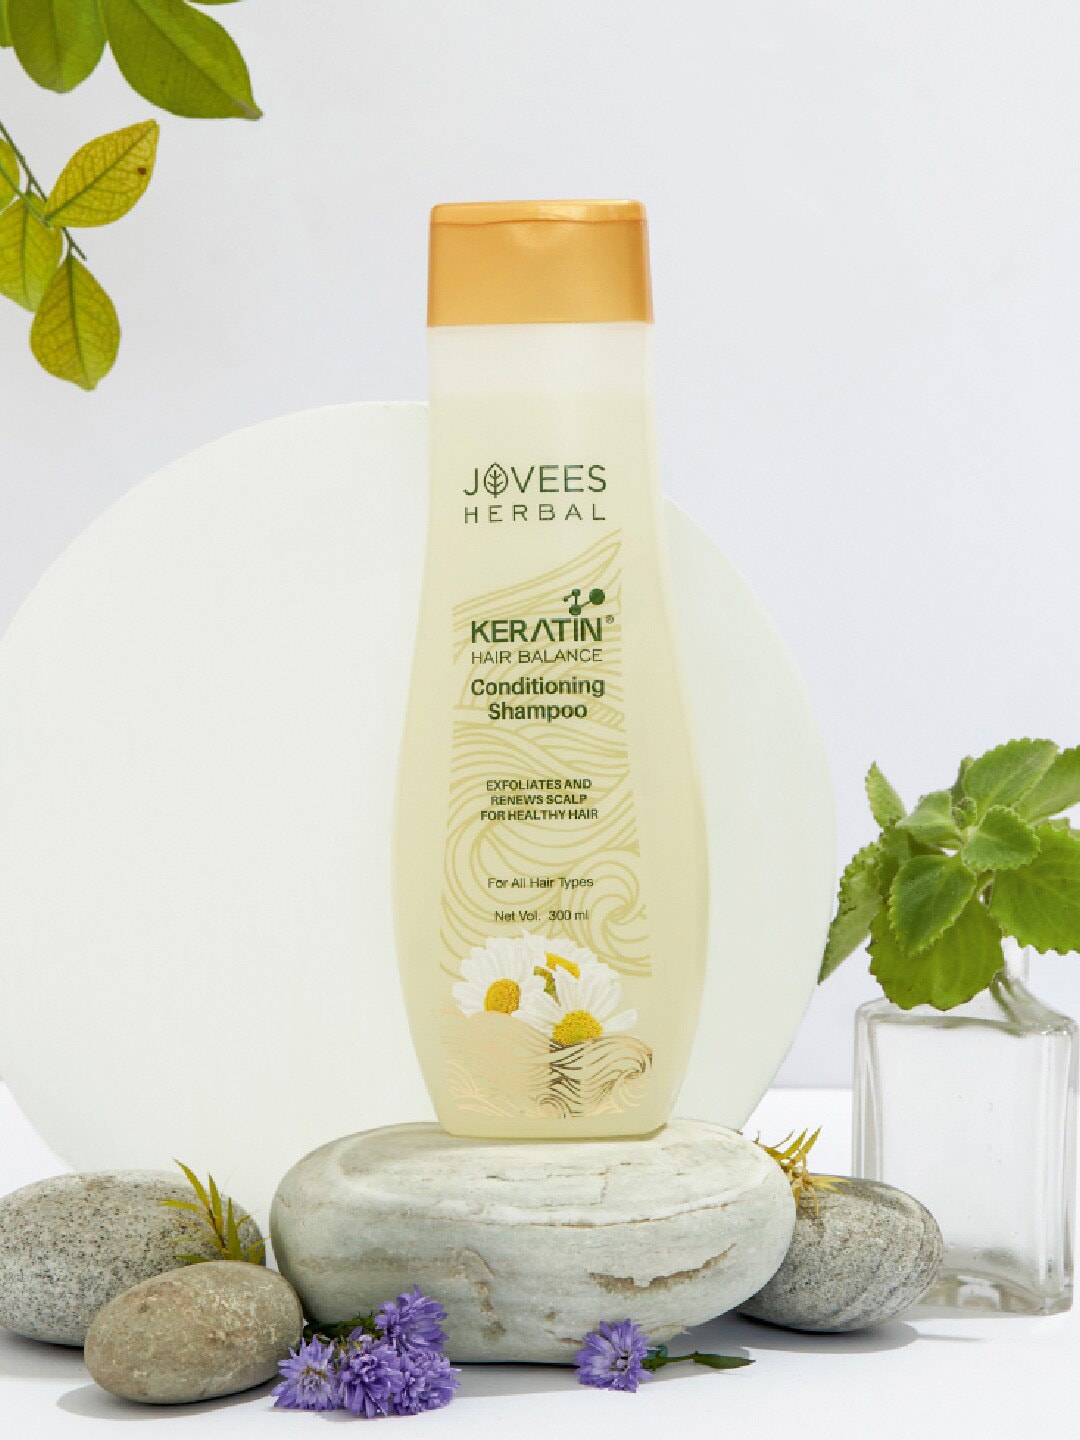 Jovees Unisex Keratin Hair Balance Conditioning Shampoo 300 ml Price in India